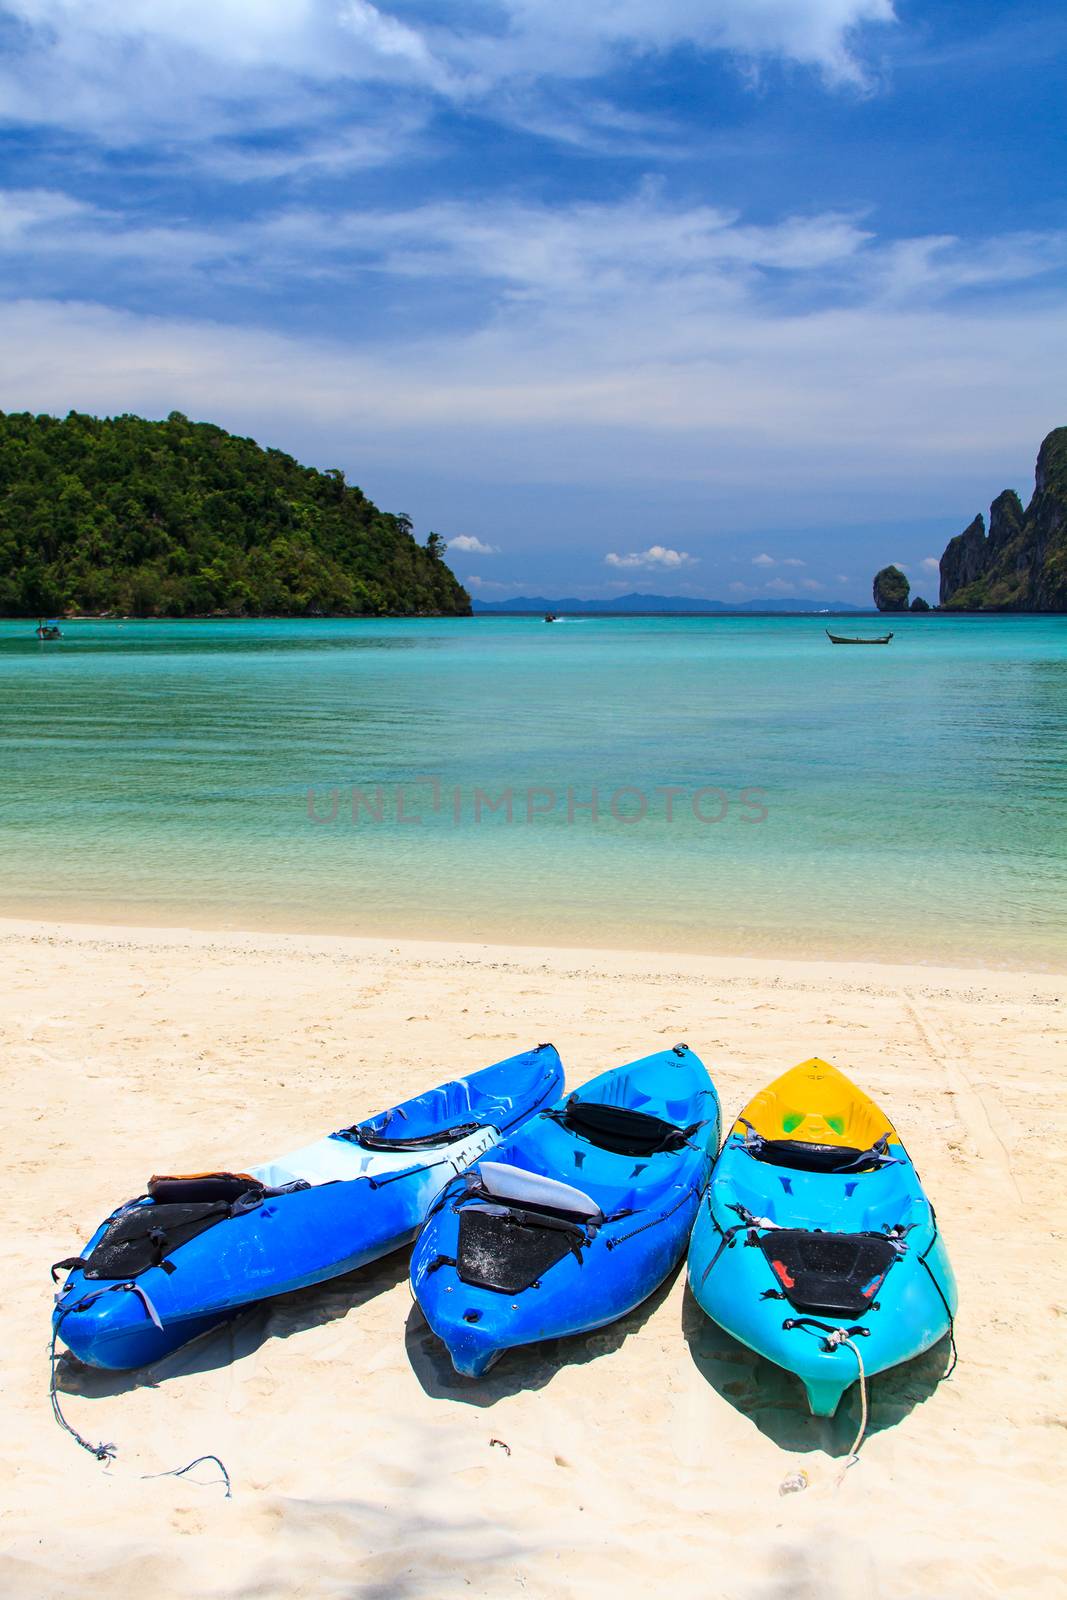 kayaks at the tropical beach Kingdom Thailand by Netfalls